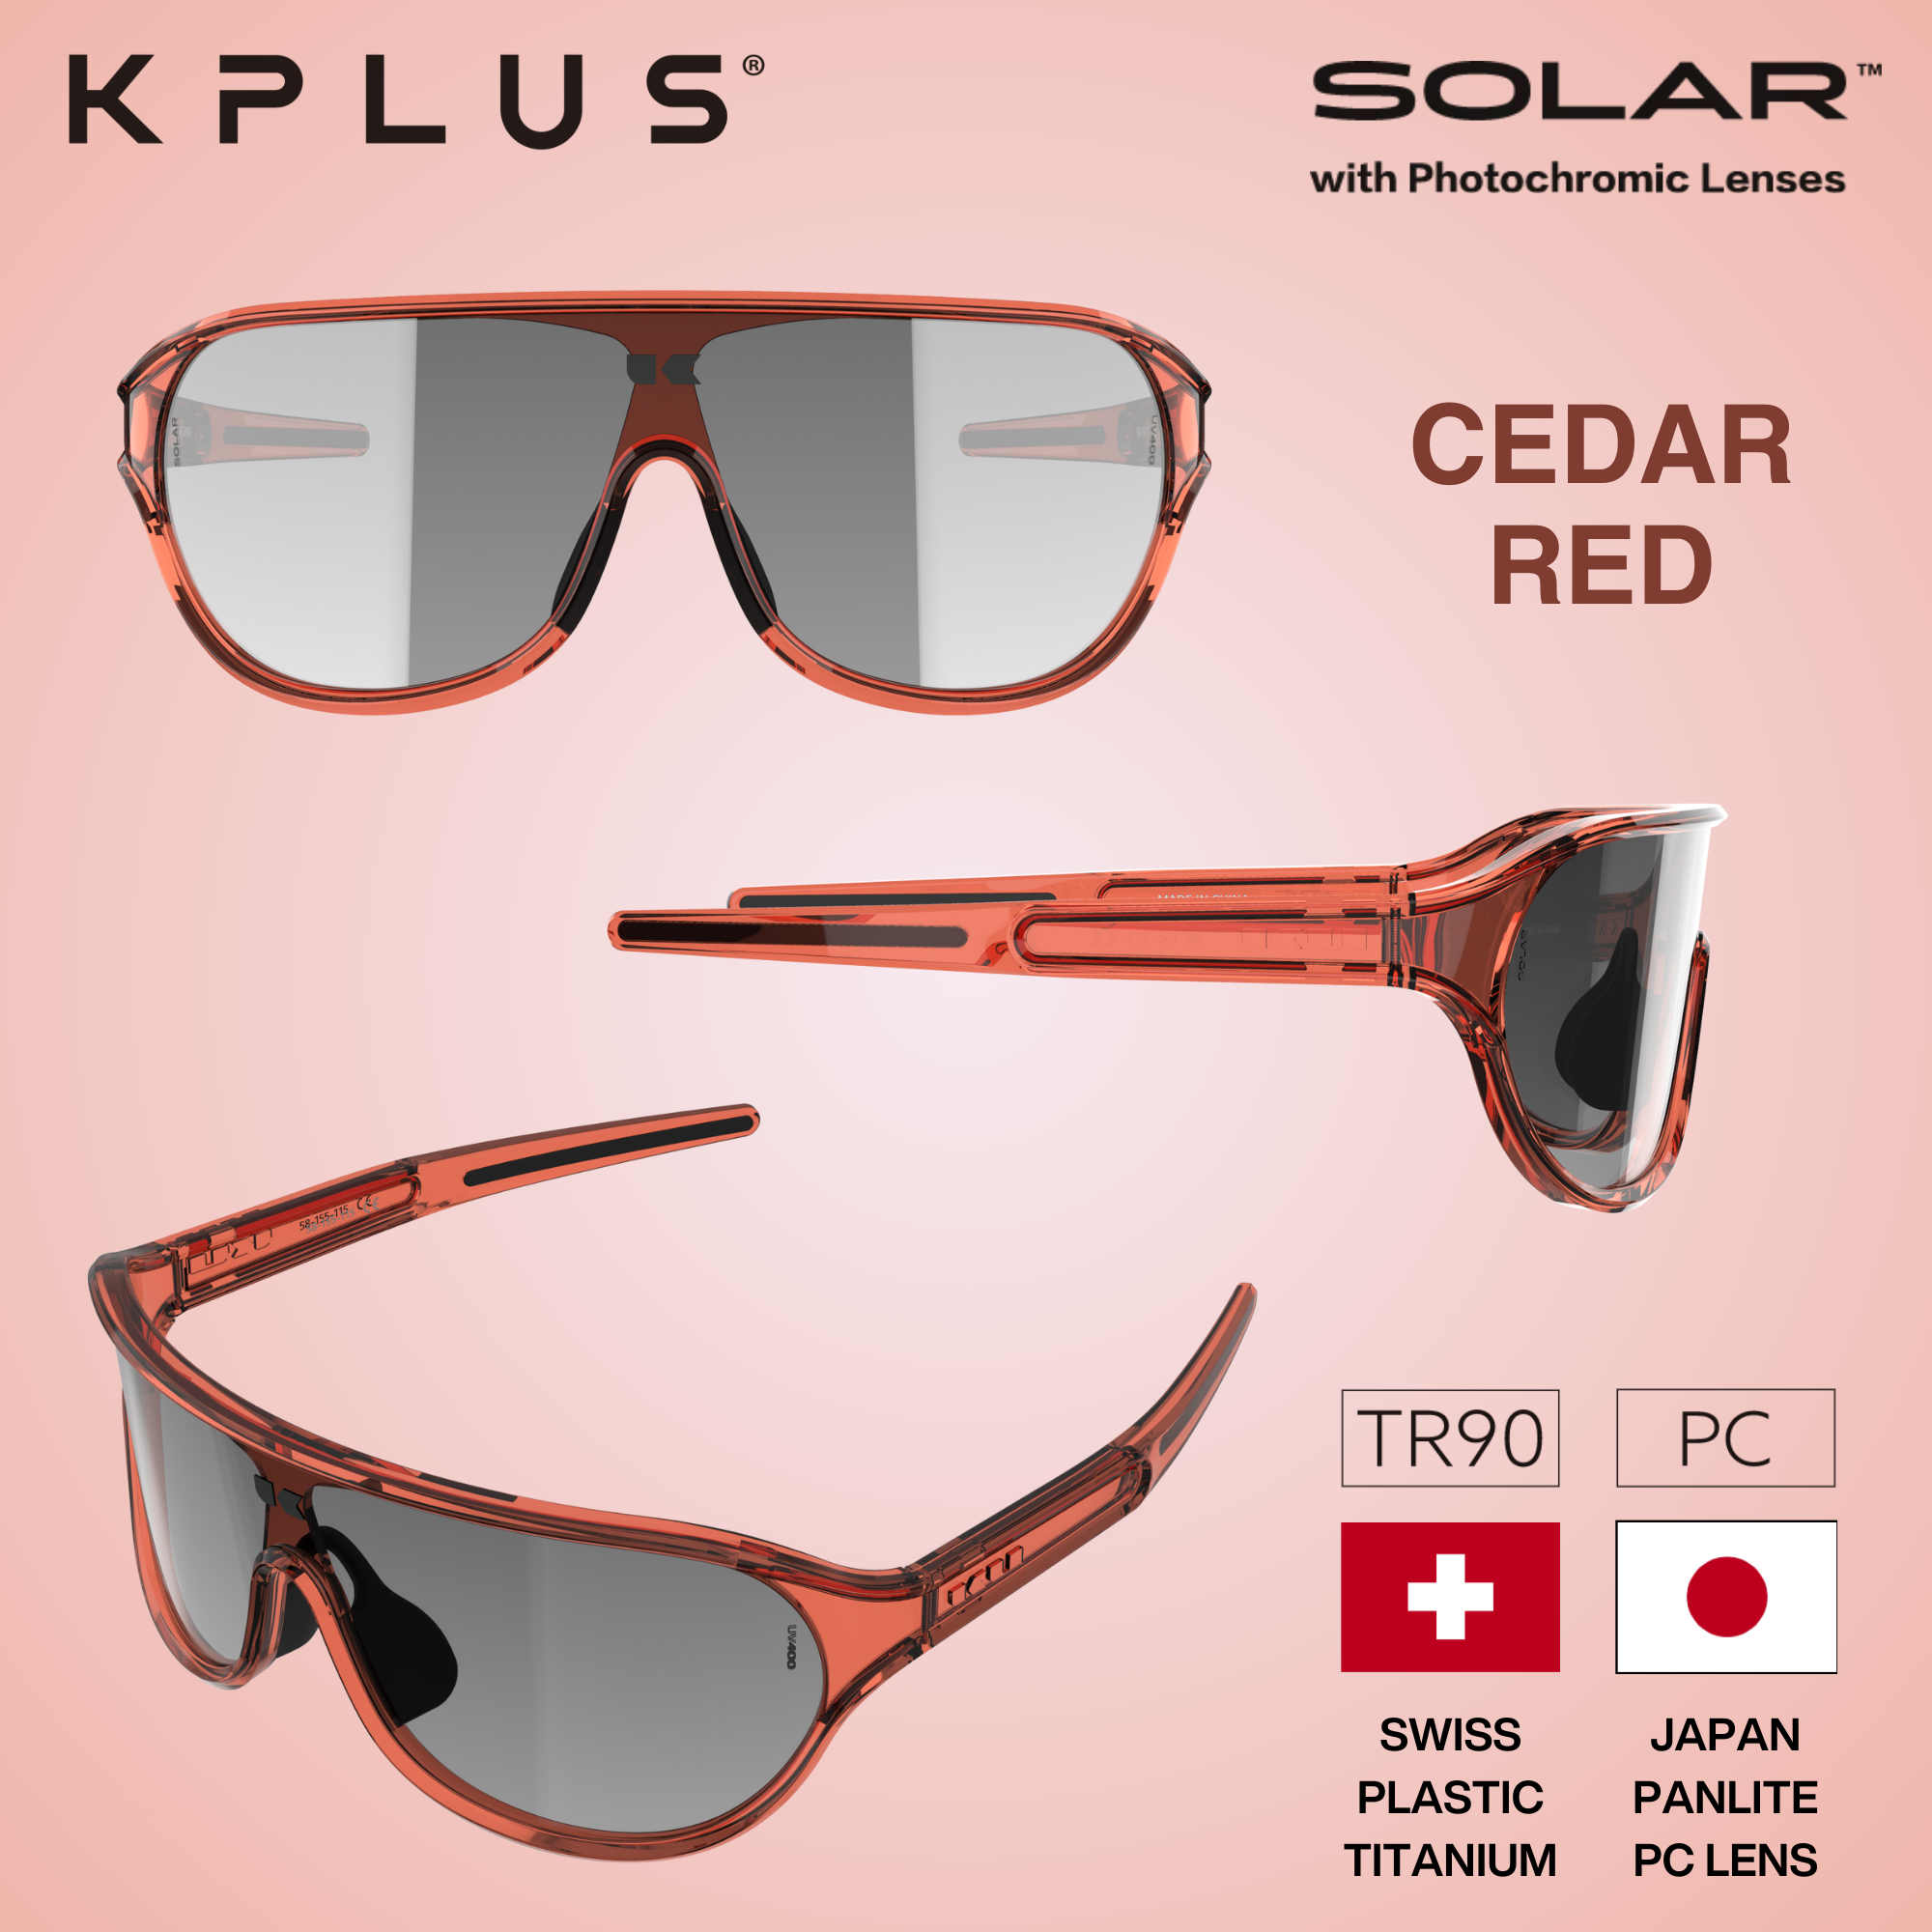 KPLUS KU SOLAR Photochromic Lens Cycling Eyewear [6 frame colours]